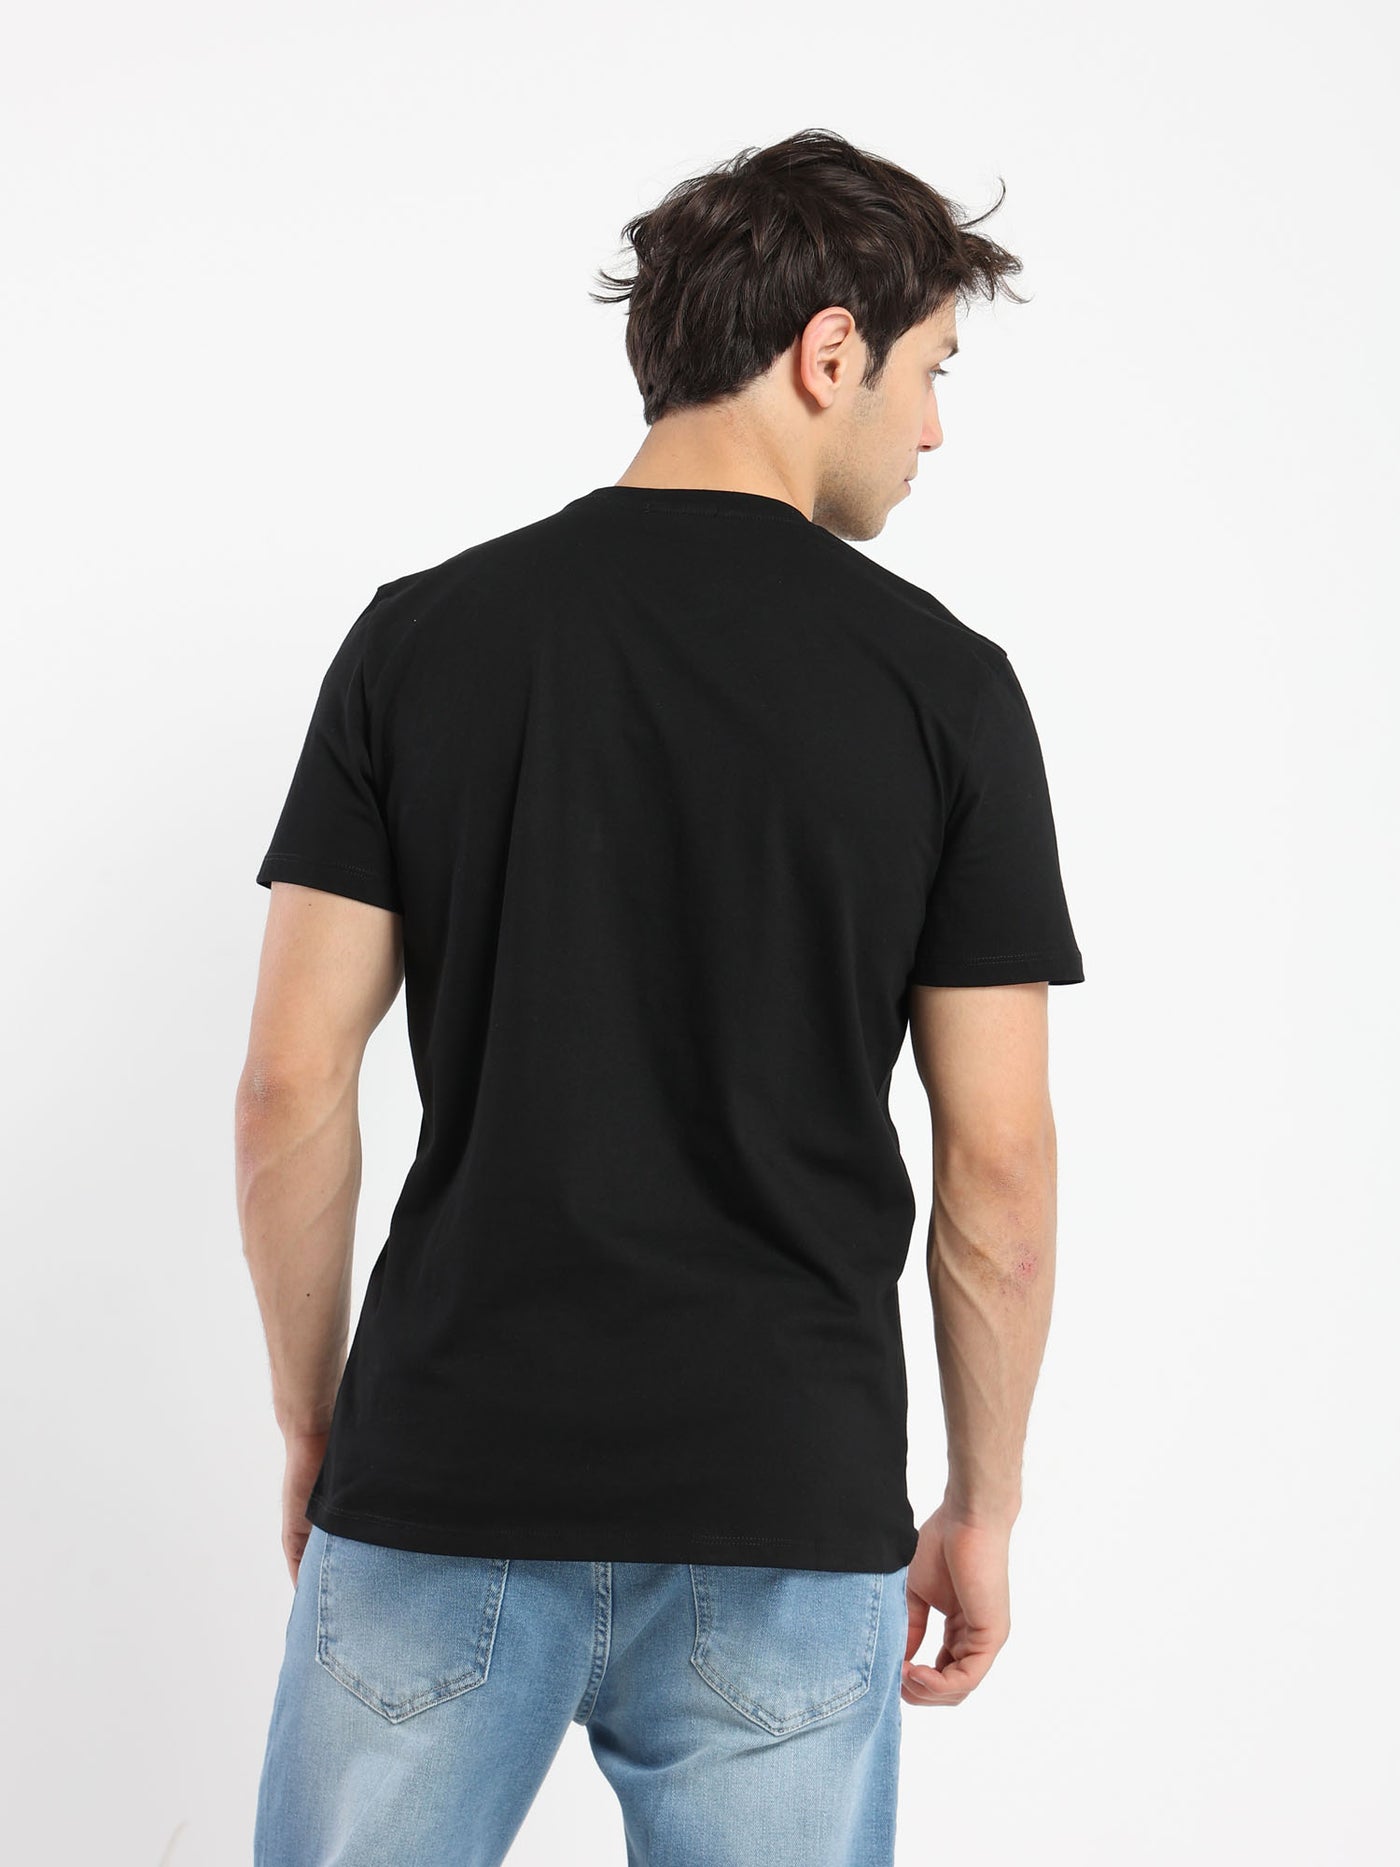 T-Shirt - "Control Your Destiny" Front Print - Regular Fit